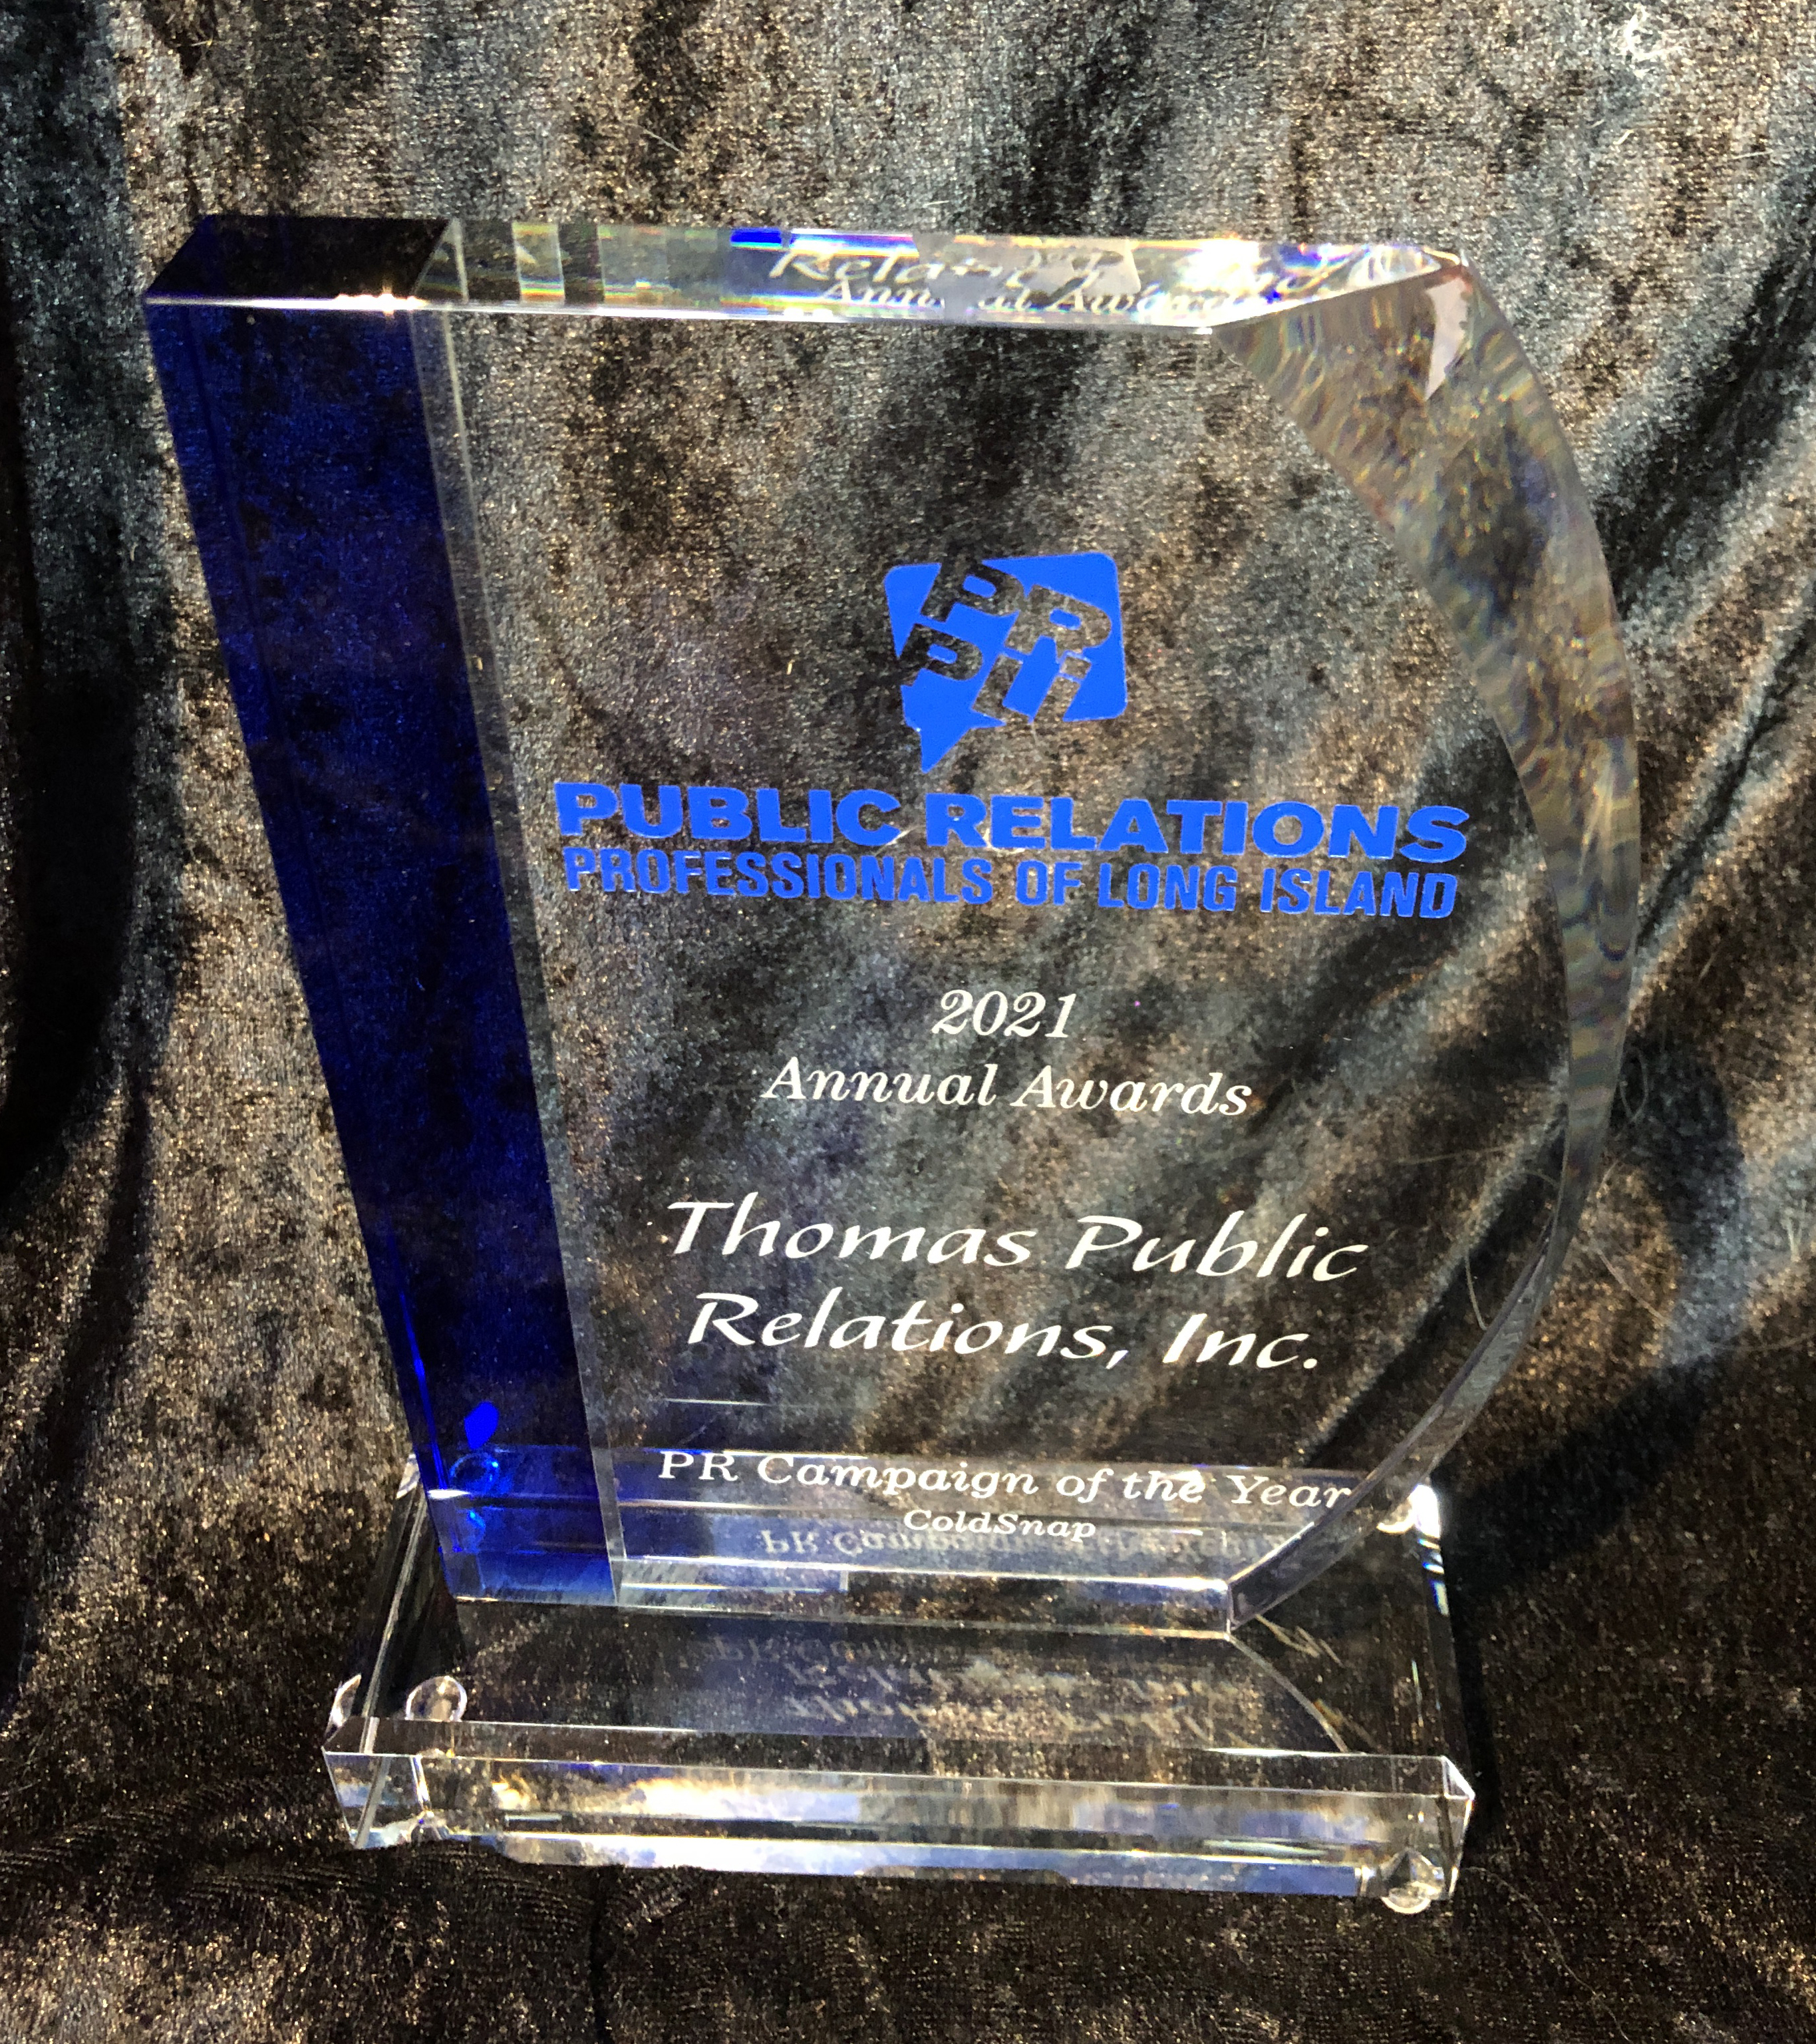 New! Thomas PR Wins PRPLI 2021 PR CAMPAIGN OF THE YEAR!